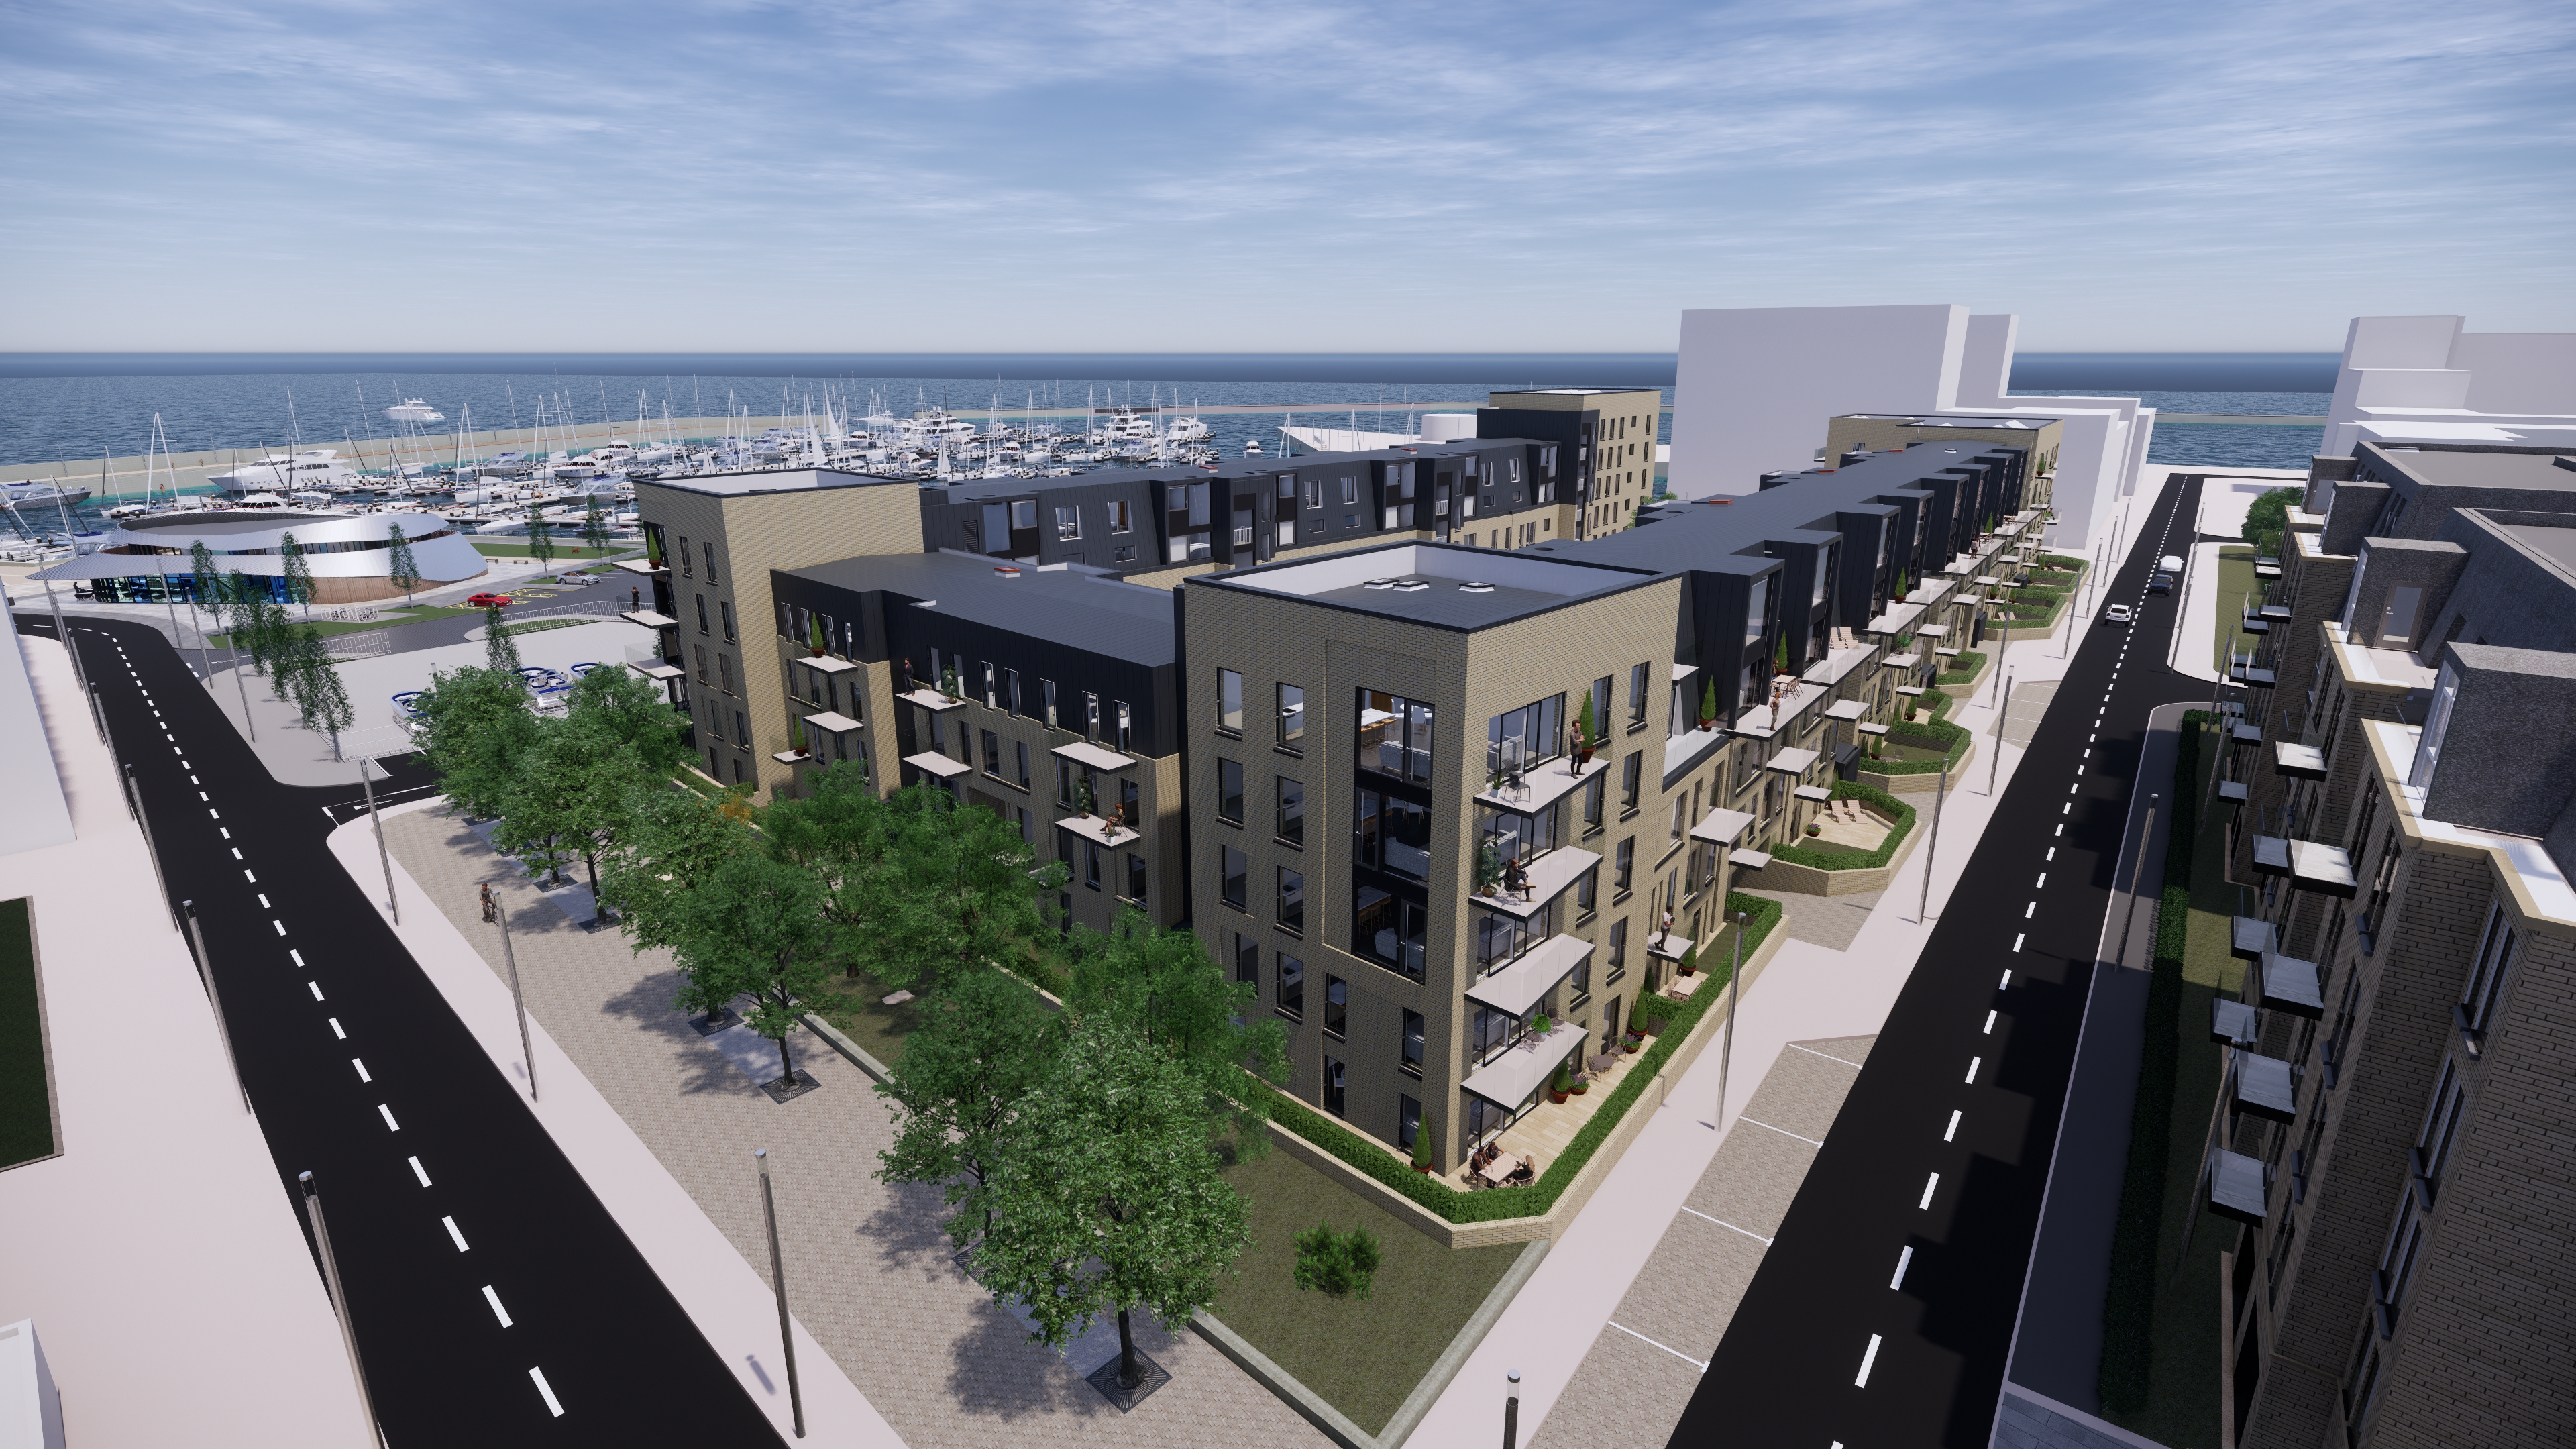 Edinburgh Marina wins planning appeal for 100 apartments